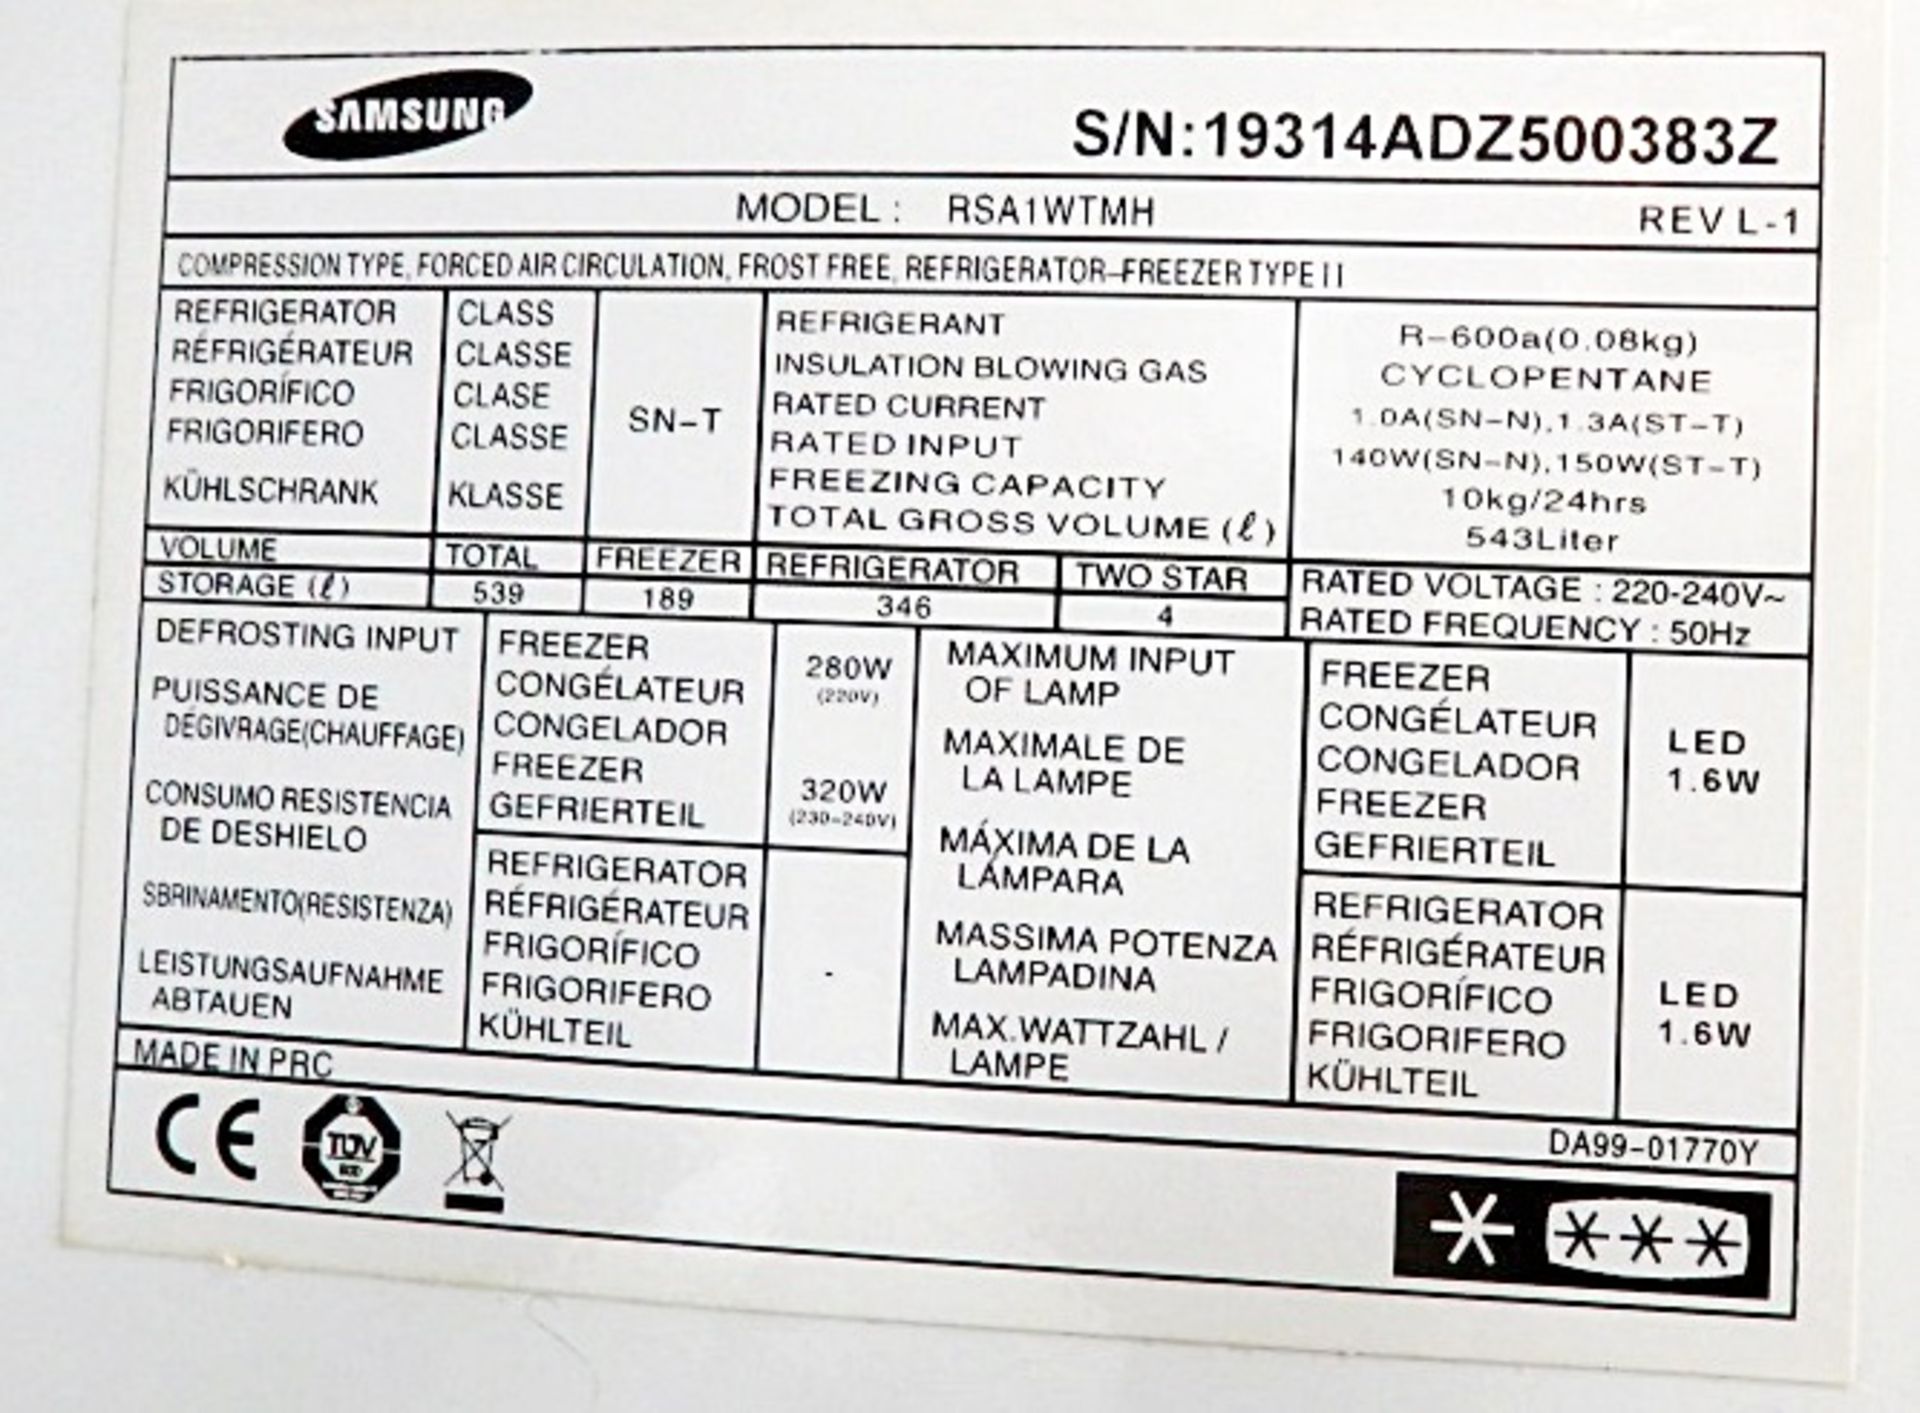 1 x Samsung American-Style (Side By Side) Fridge / Freezer RSA1WTMH - Dimensions: W91 x H178 x D73cm - Image 14 of 20